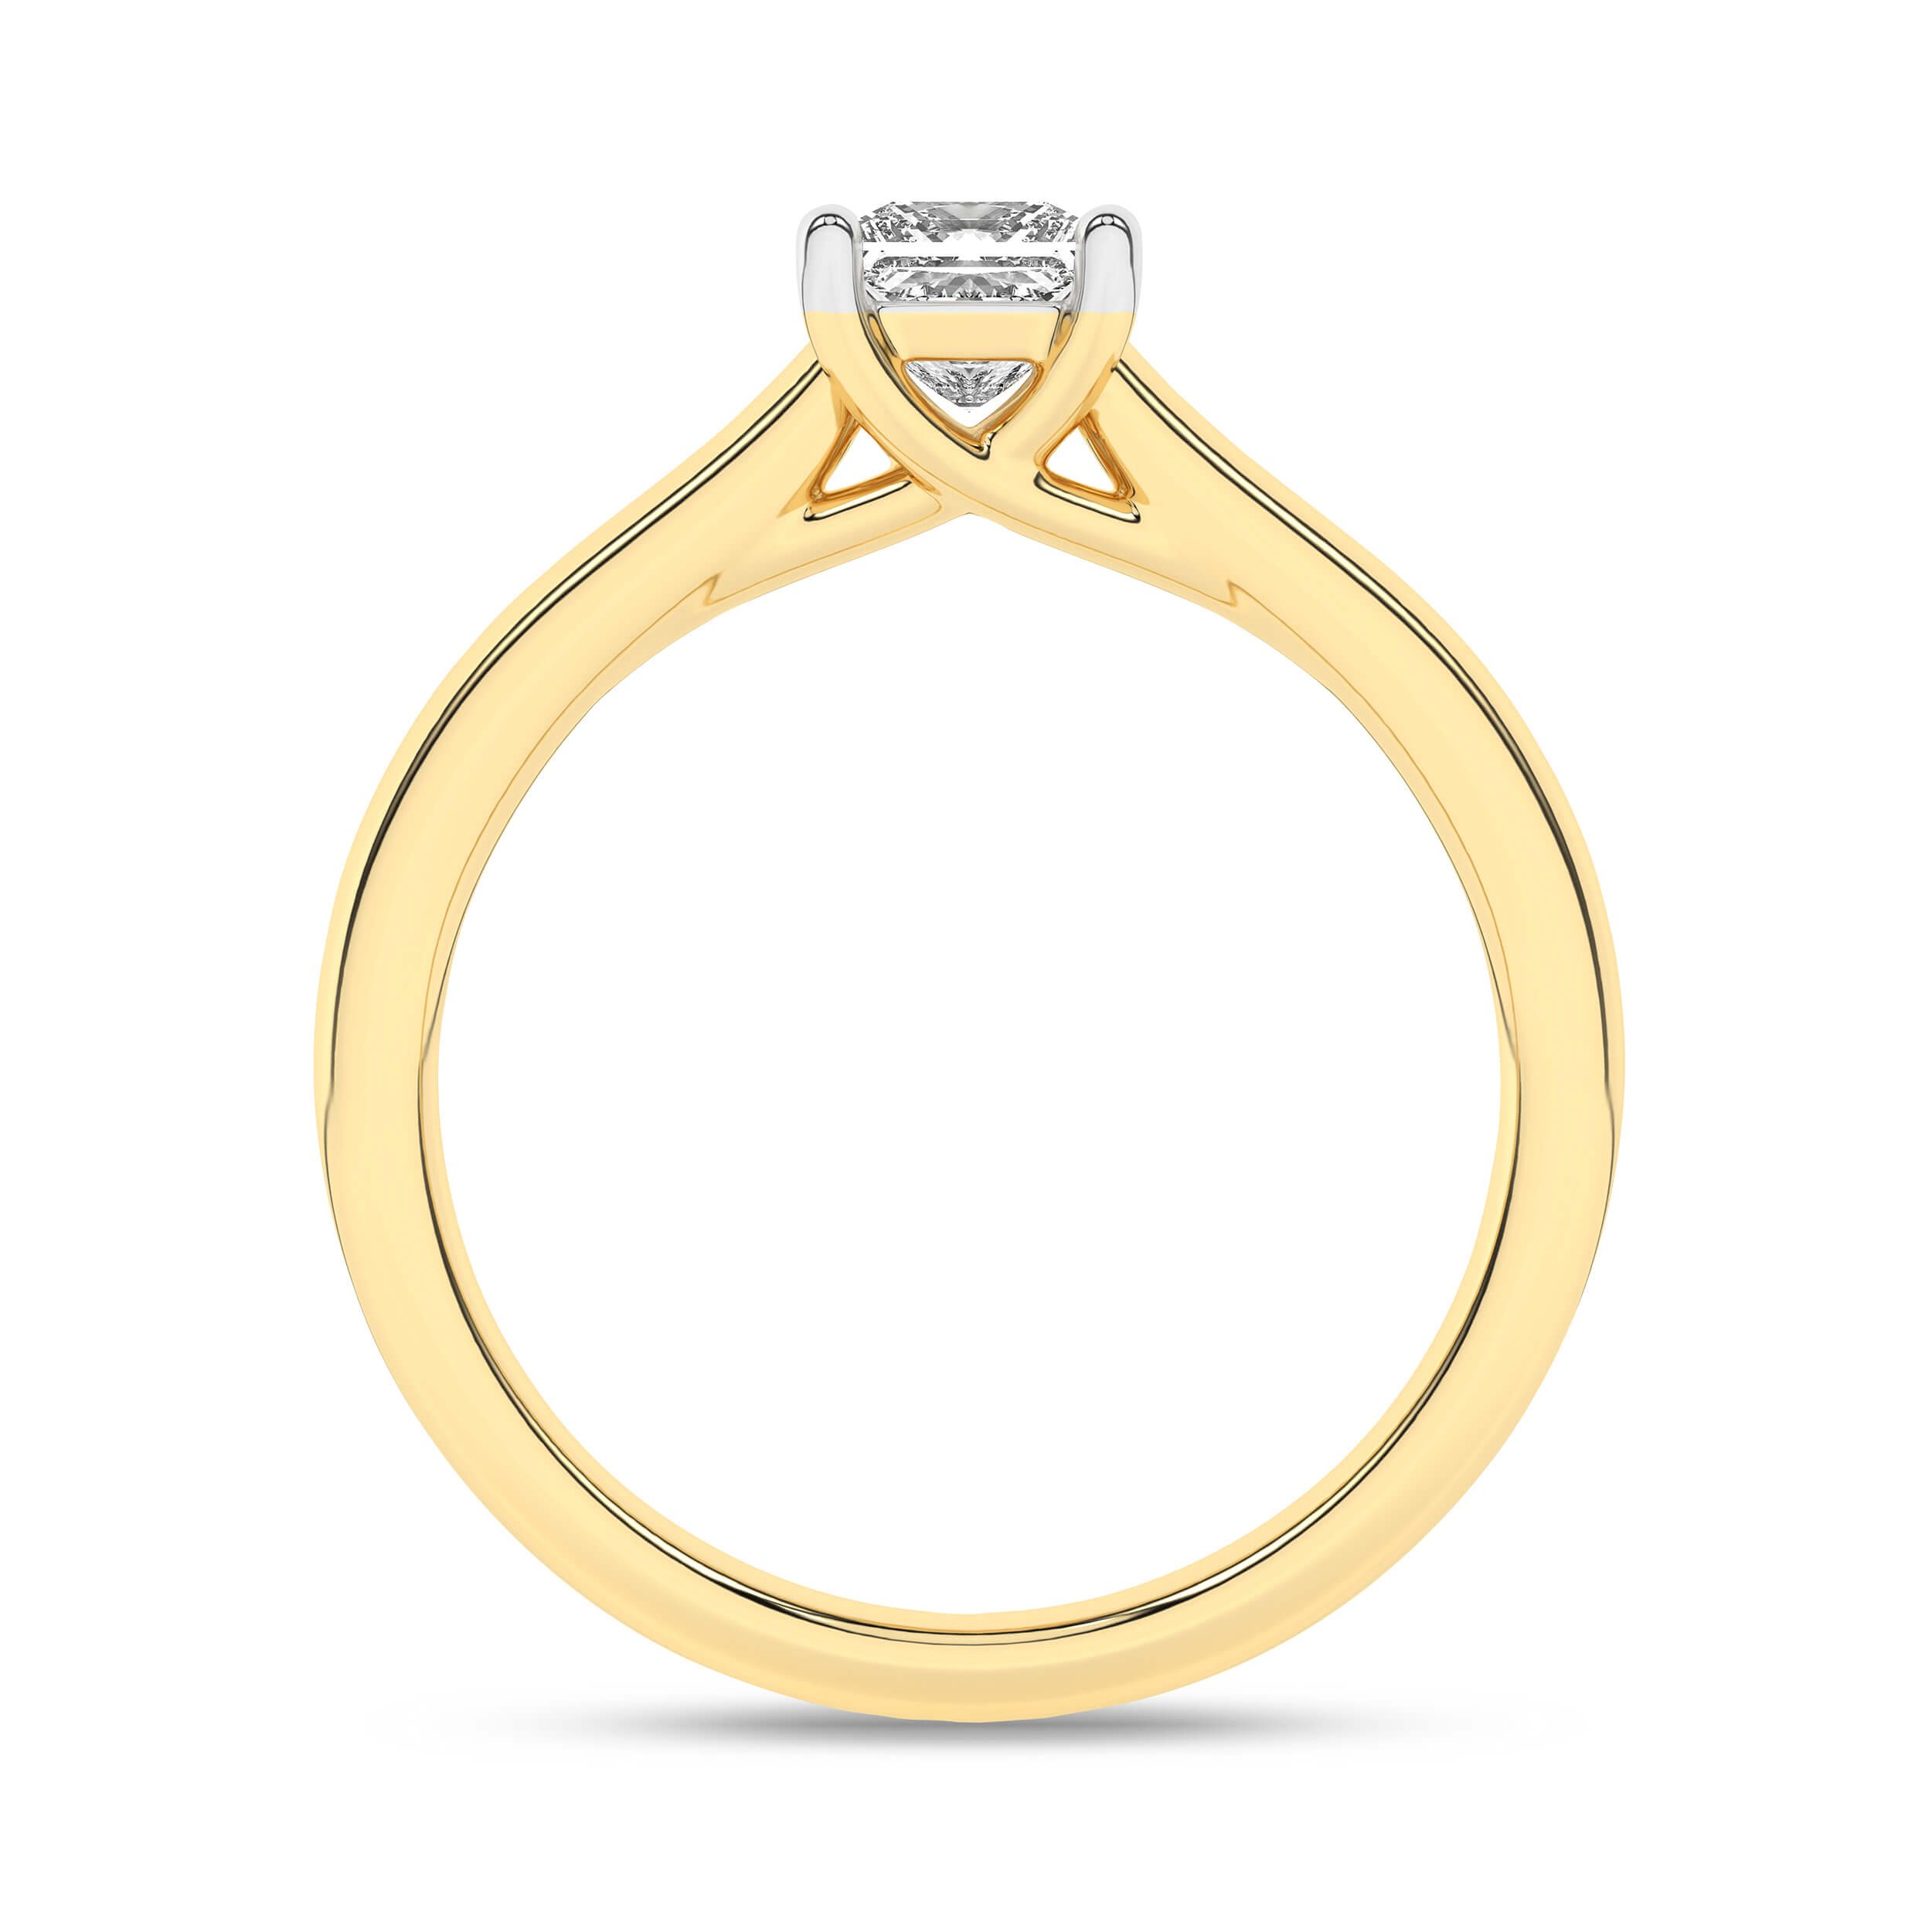 Inel de logodna din Aur Galben 14K cu Diamant 0.50Ct, articol RB18882EG, previzualizare foto 1